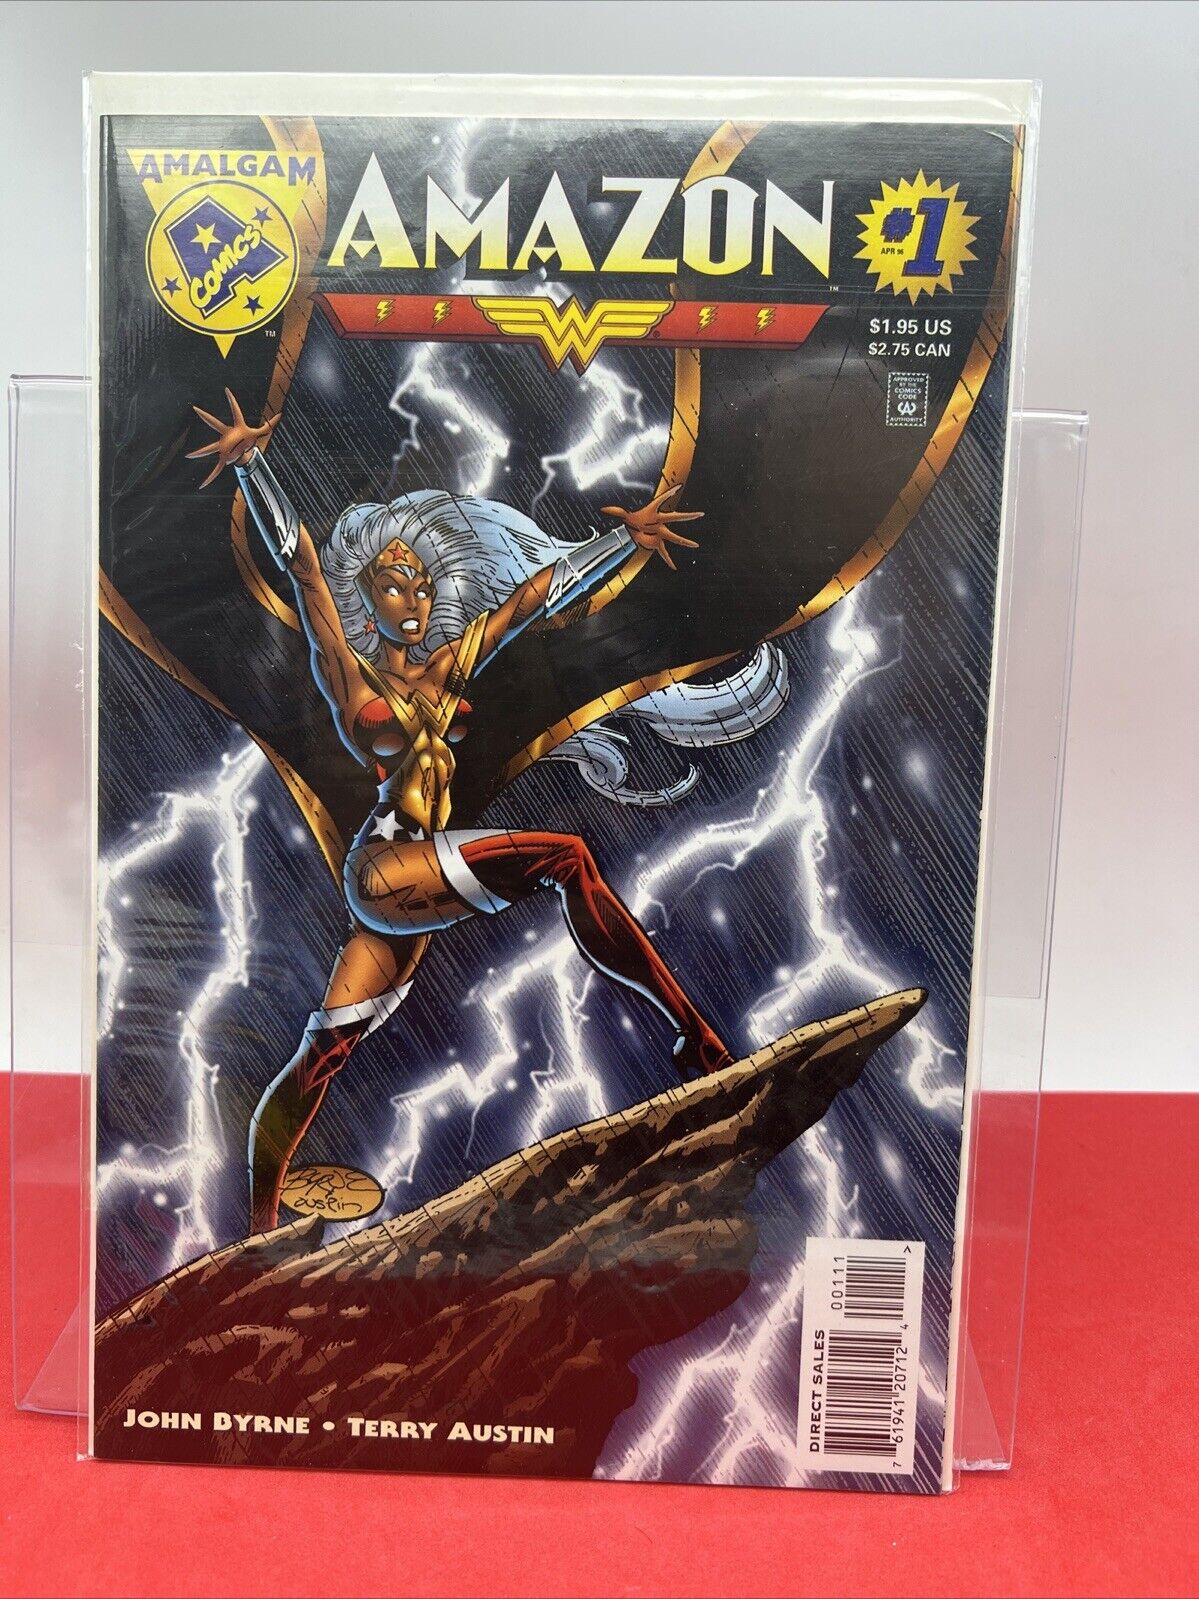 Amazon #1 Storm Wonder Woman Amalgam VF+ (1996 DC Marvel Comics)